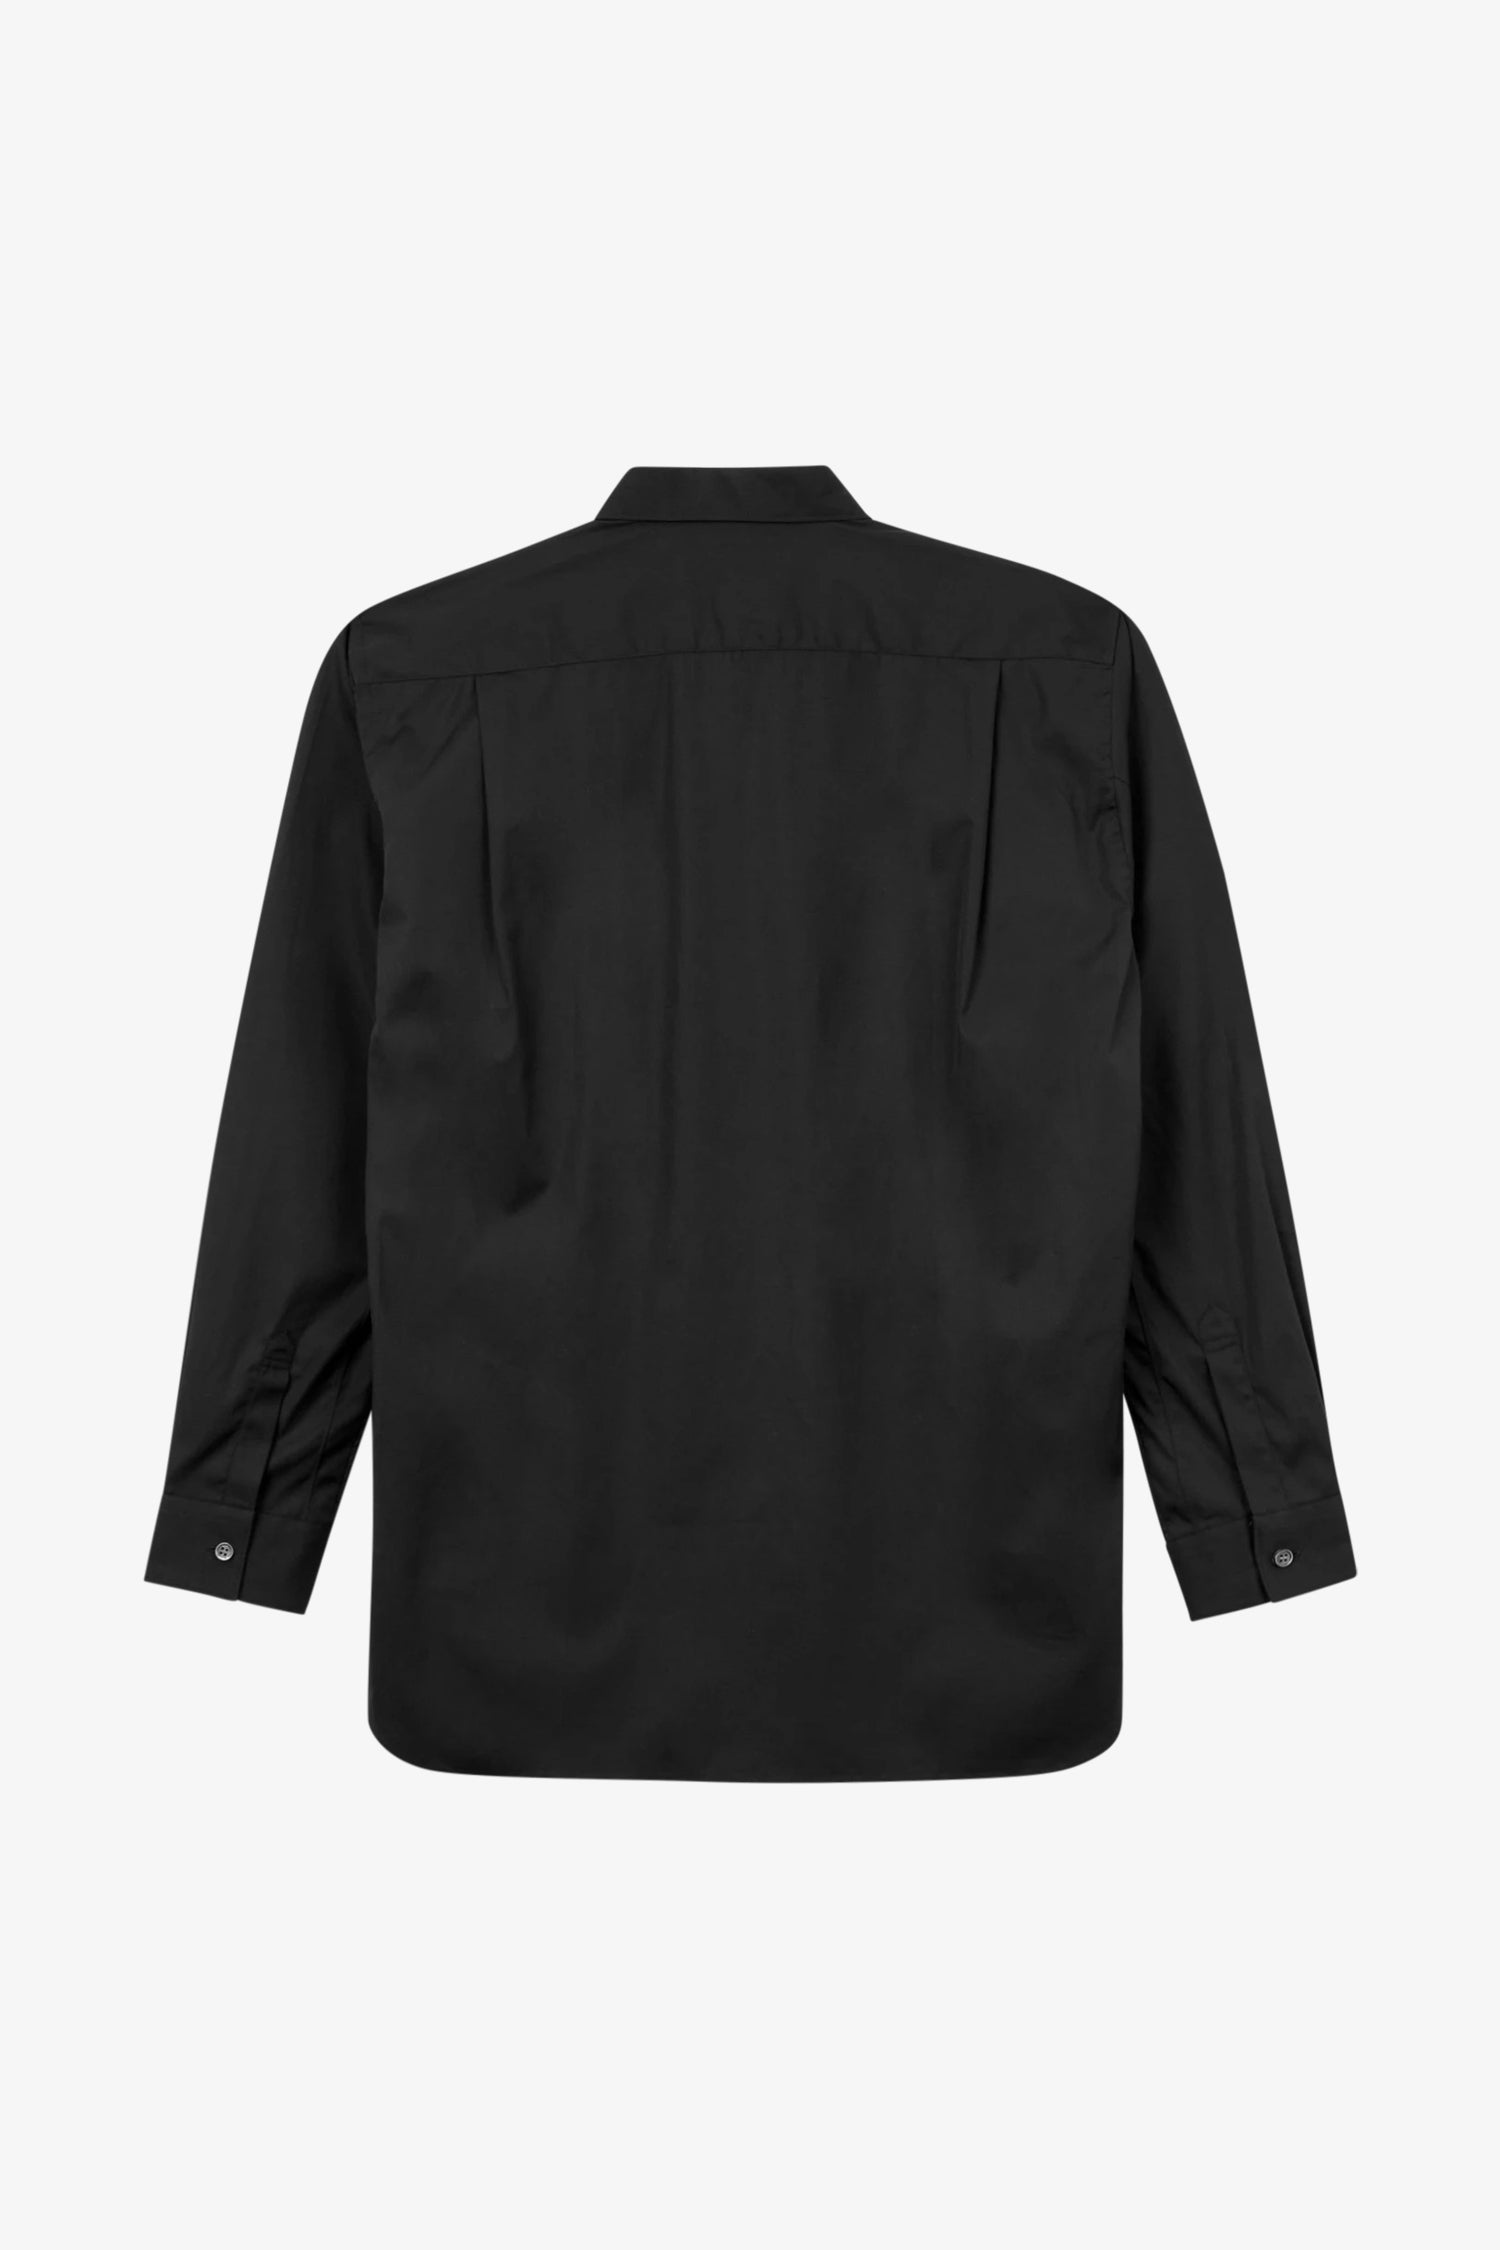 Selectshop FRAME - COMME DES GARÇONS SHIRT Quilt Blocks Shirt Shirts Dubai